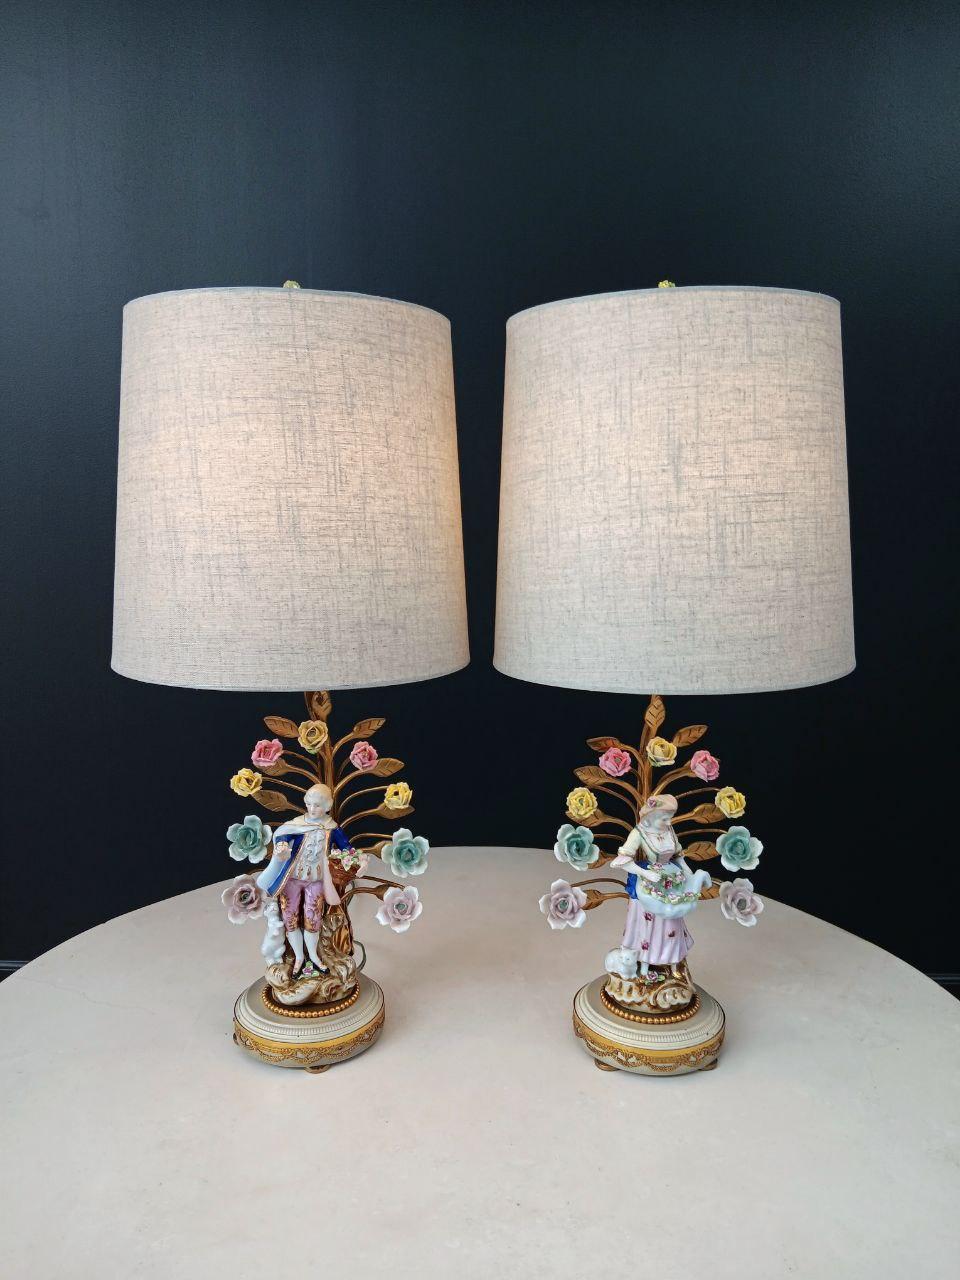 Original Vintage Condition

Lamps:
27”H x 8.50”W x 5.50”D
Shade:
11.50